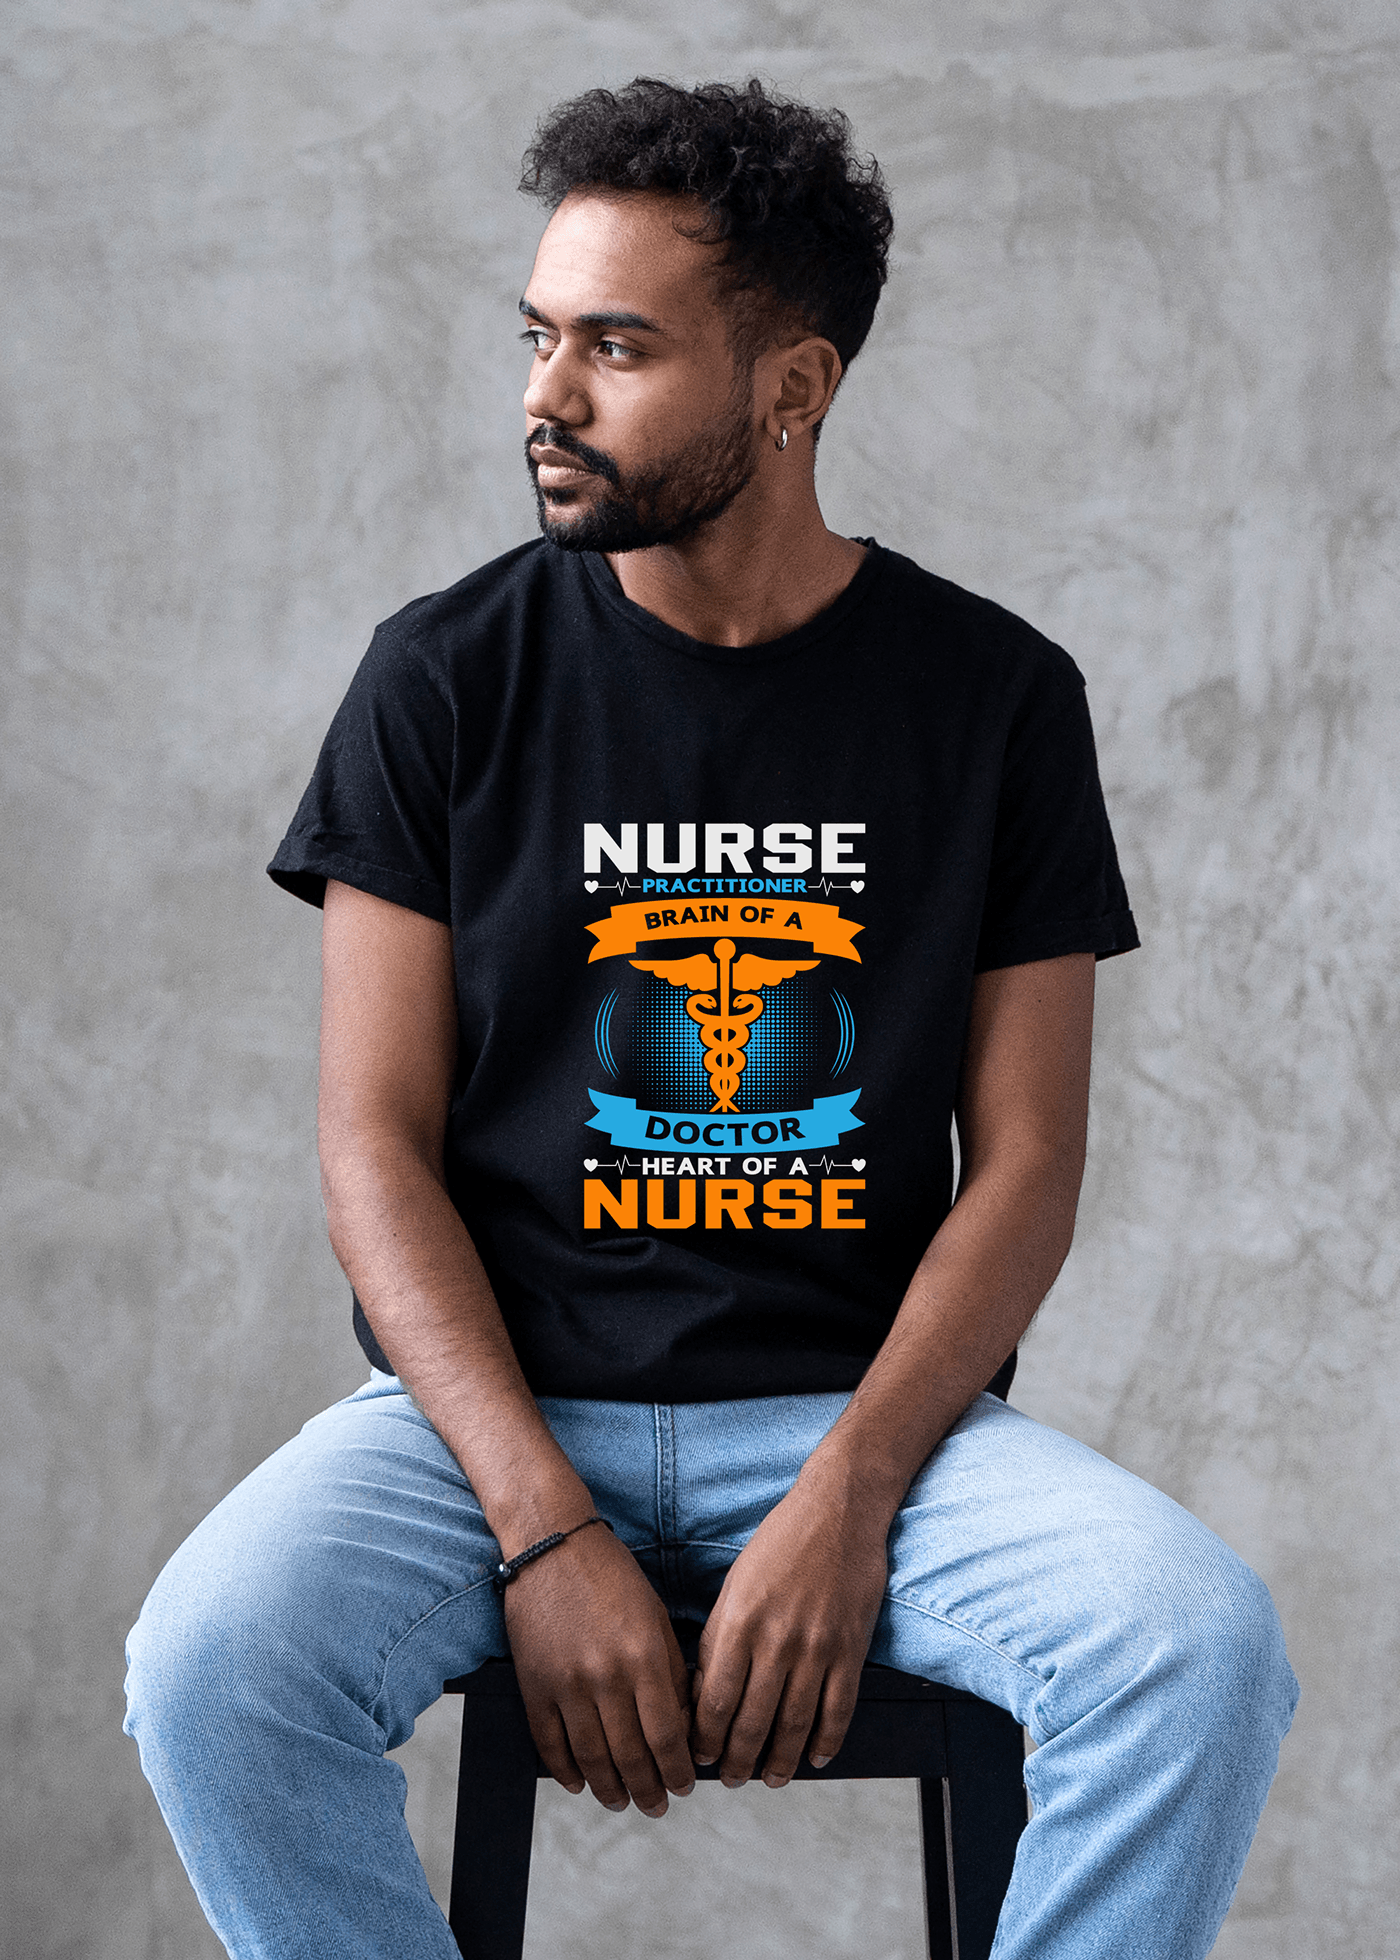 nurse t shirt design Nurse T-shirt nurse Nursing t-shirt design nursing t shirt nursing ms graphixs designer ms graphixs designer nursign logo design